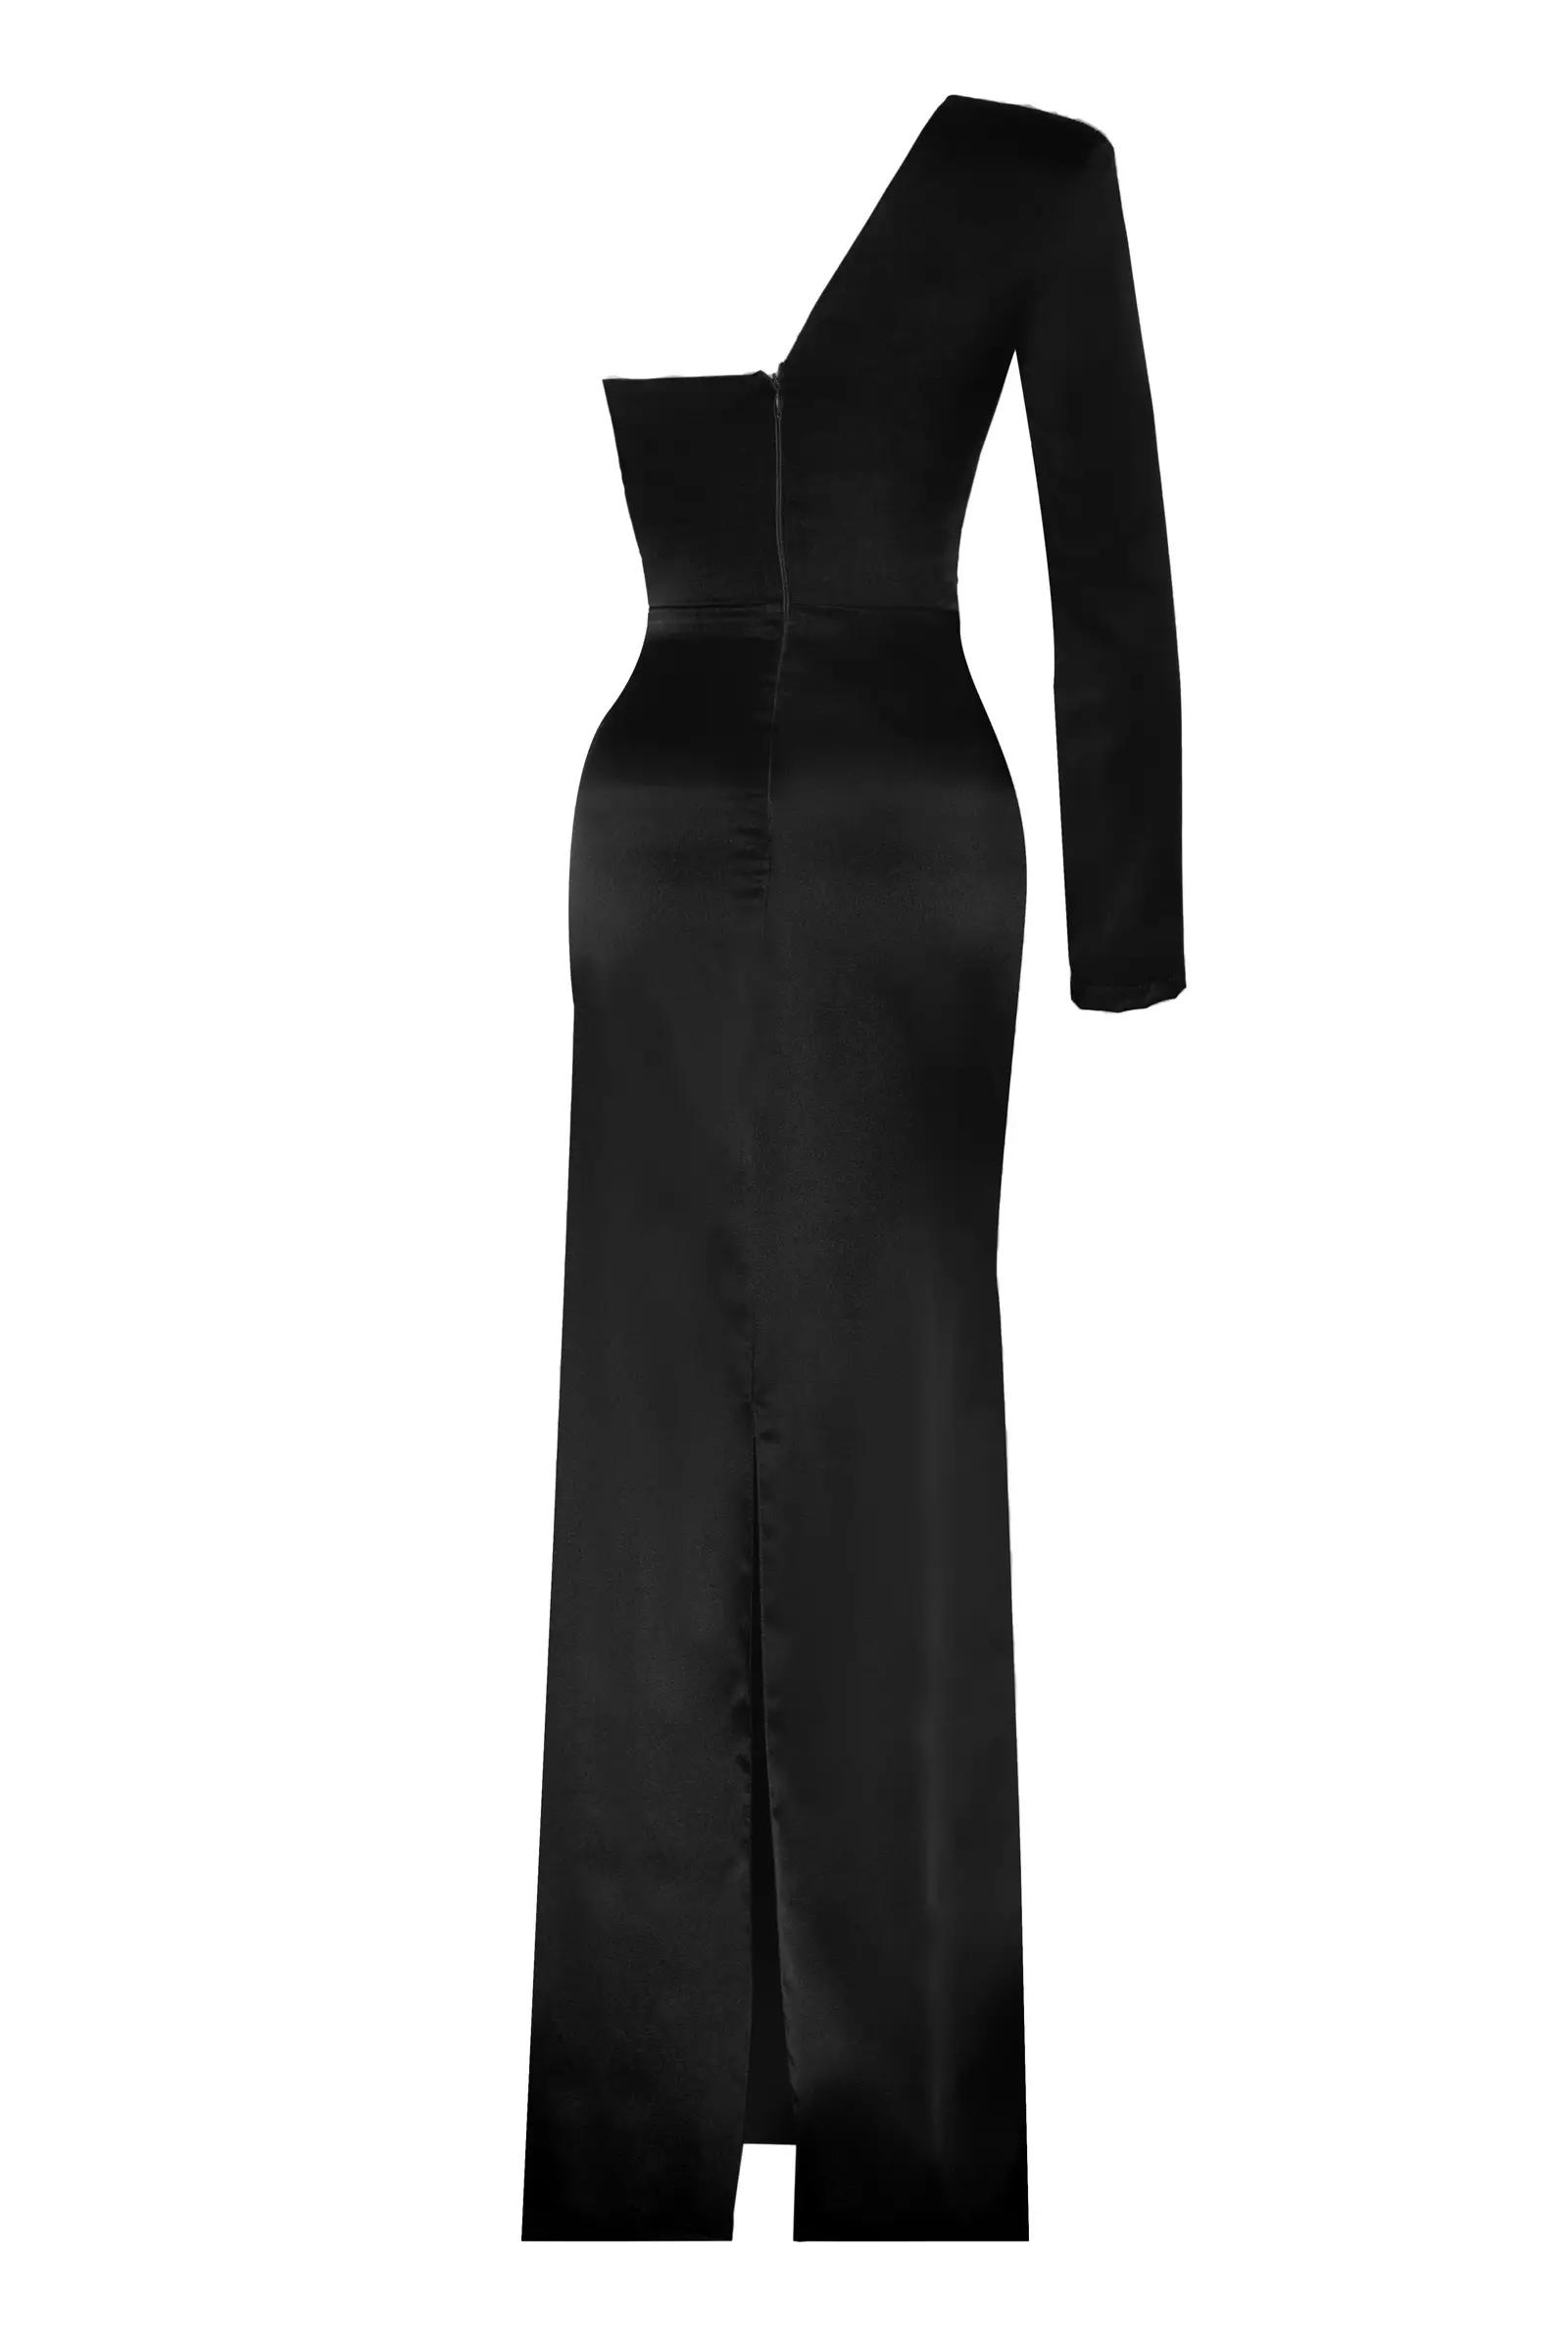 Black plus size satin one arm long dress